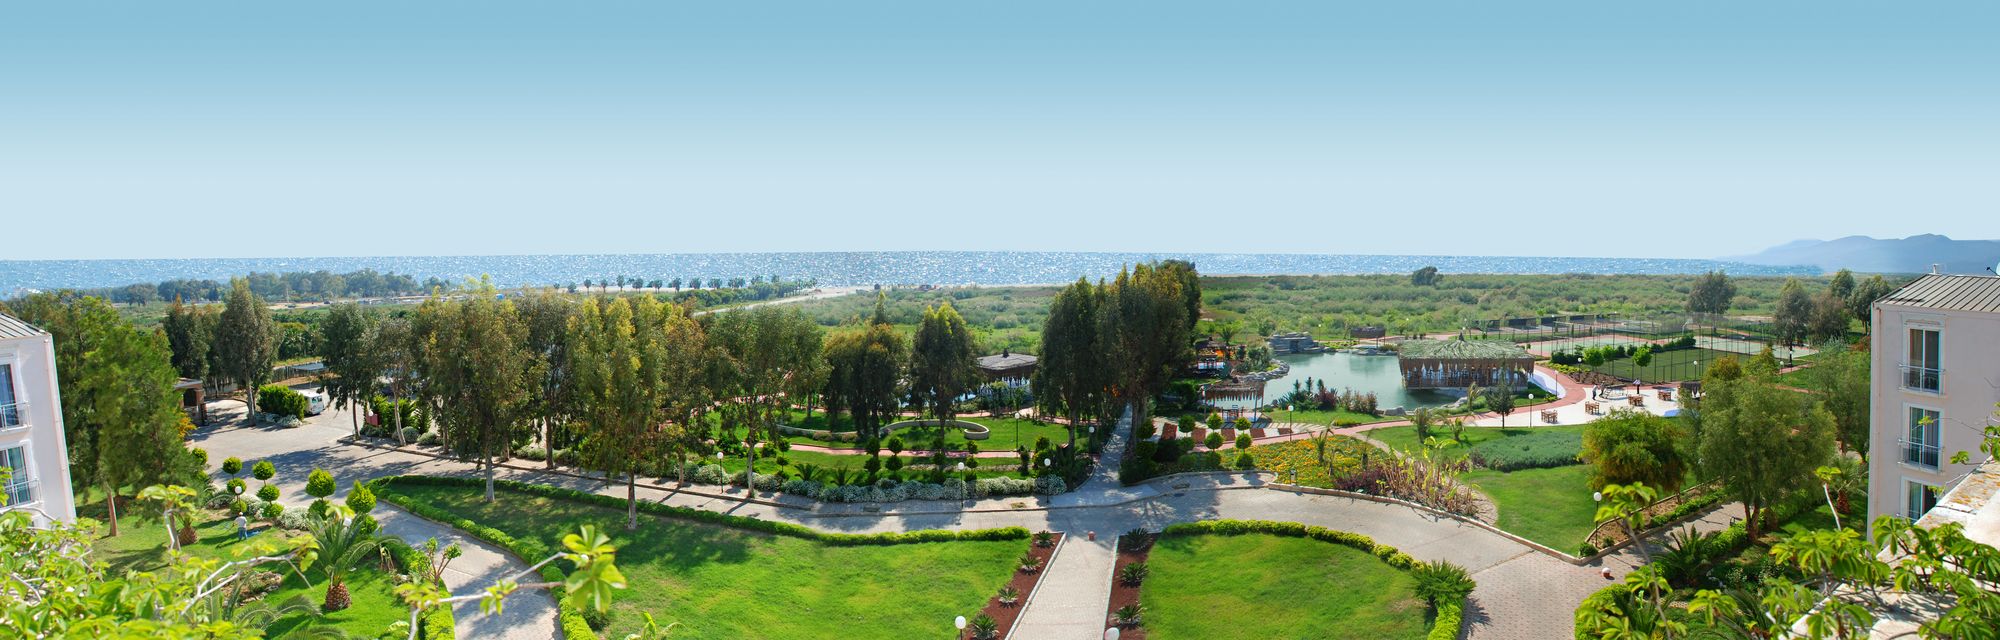 Hedef Beyt Hotel Resort & Spa (Hotel Beyt - Islamic)